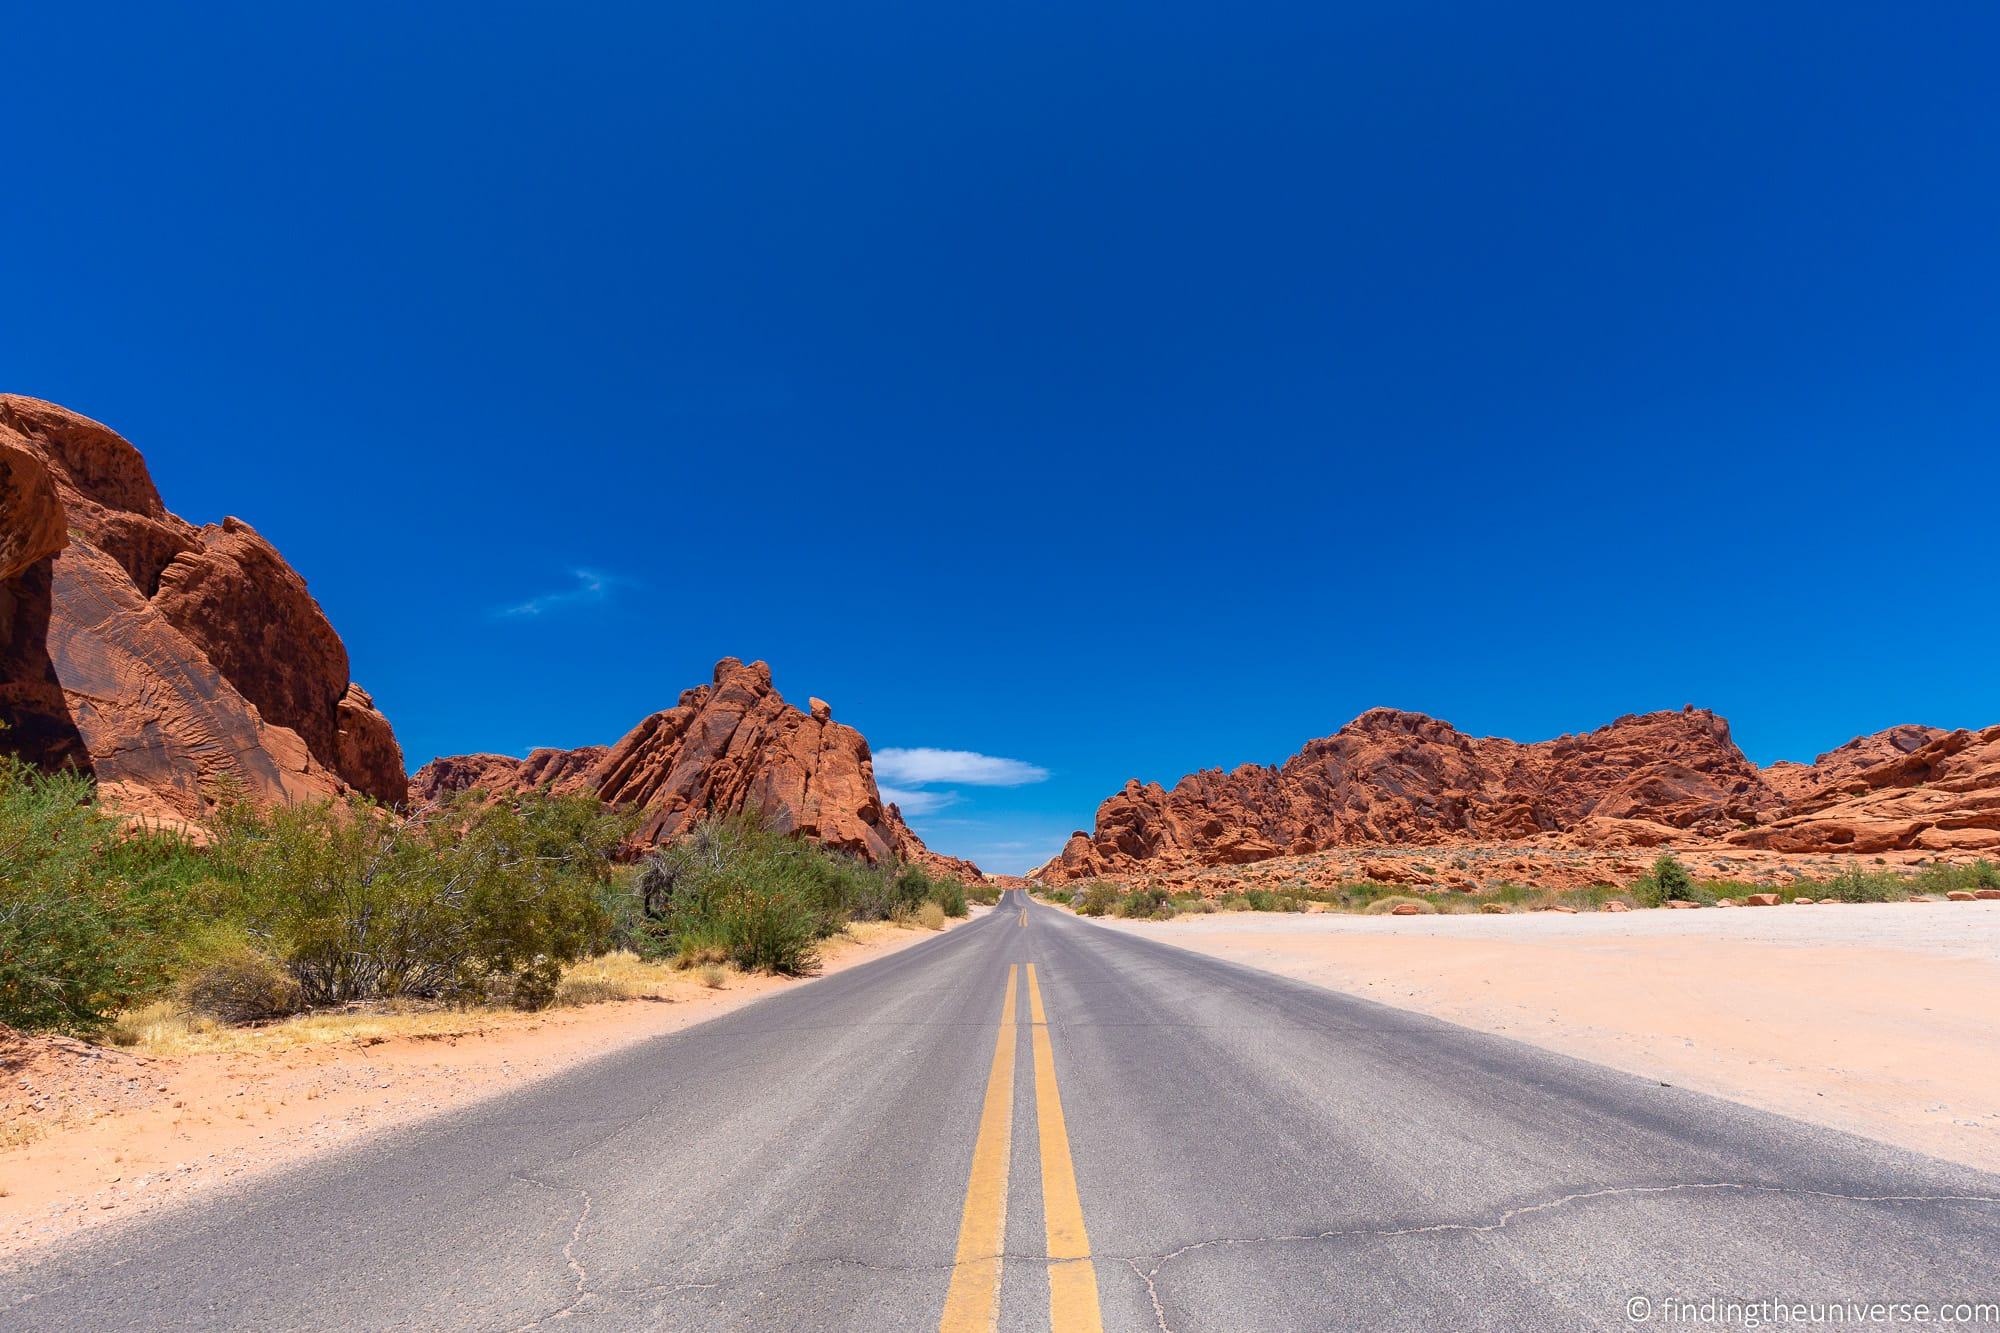 Driving to Vegas from California or Arizona? Here's Where You